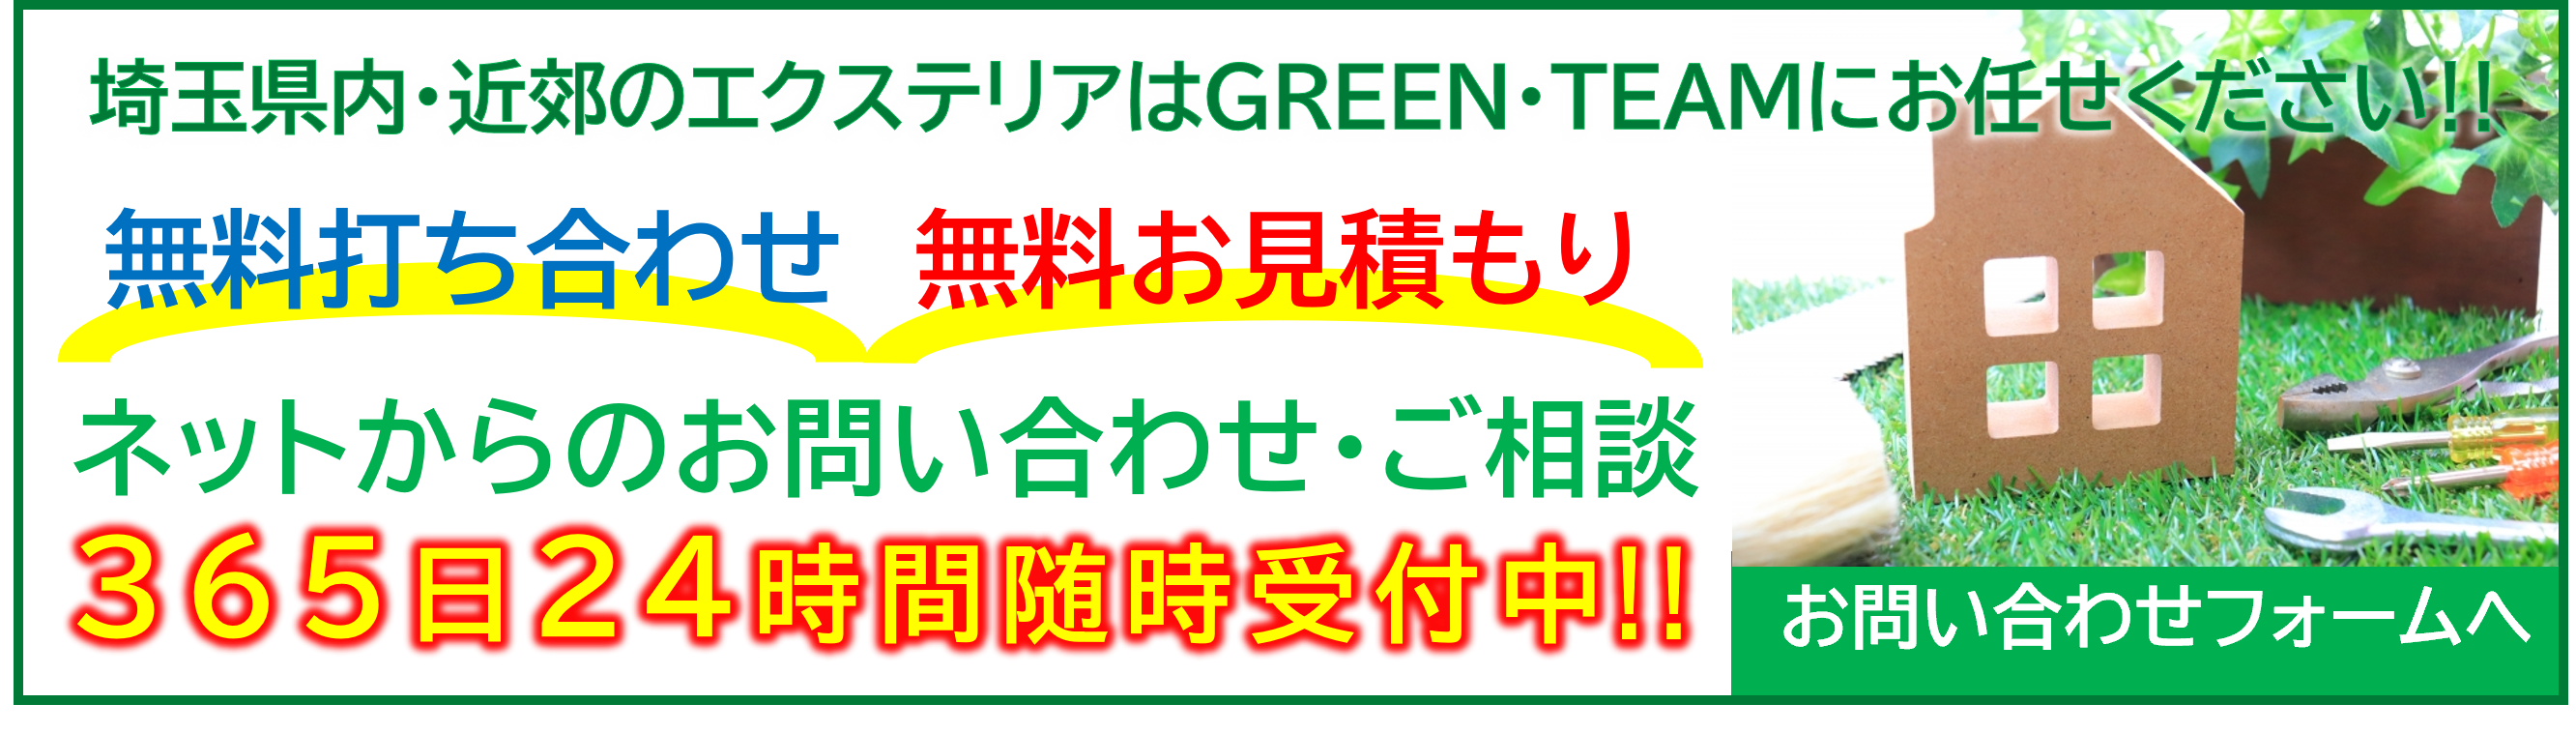 GREEN・TEAM東川口のお問い合わせフォームへのリンク